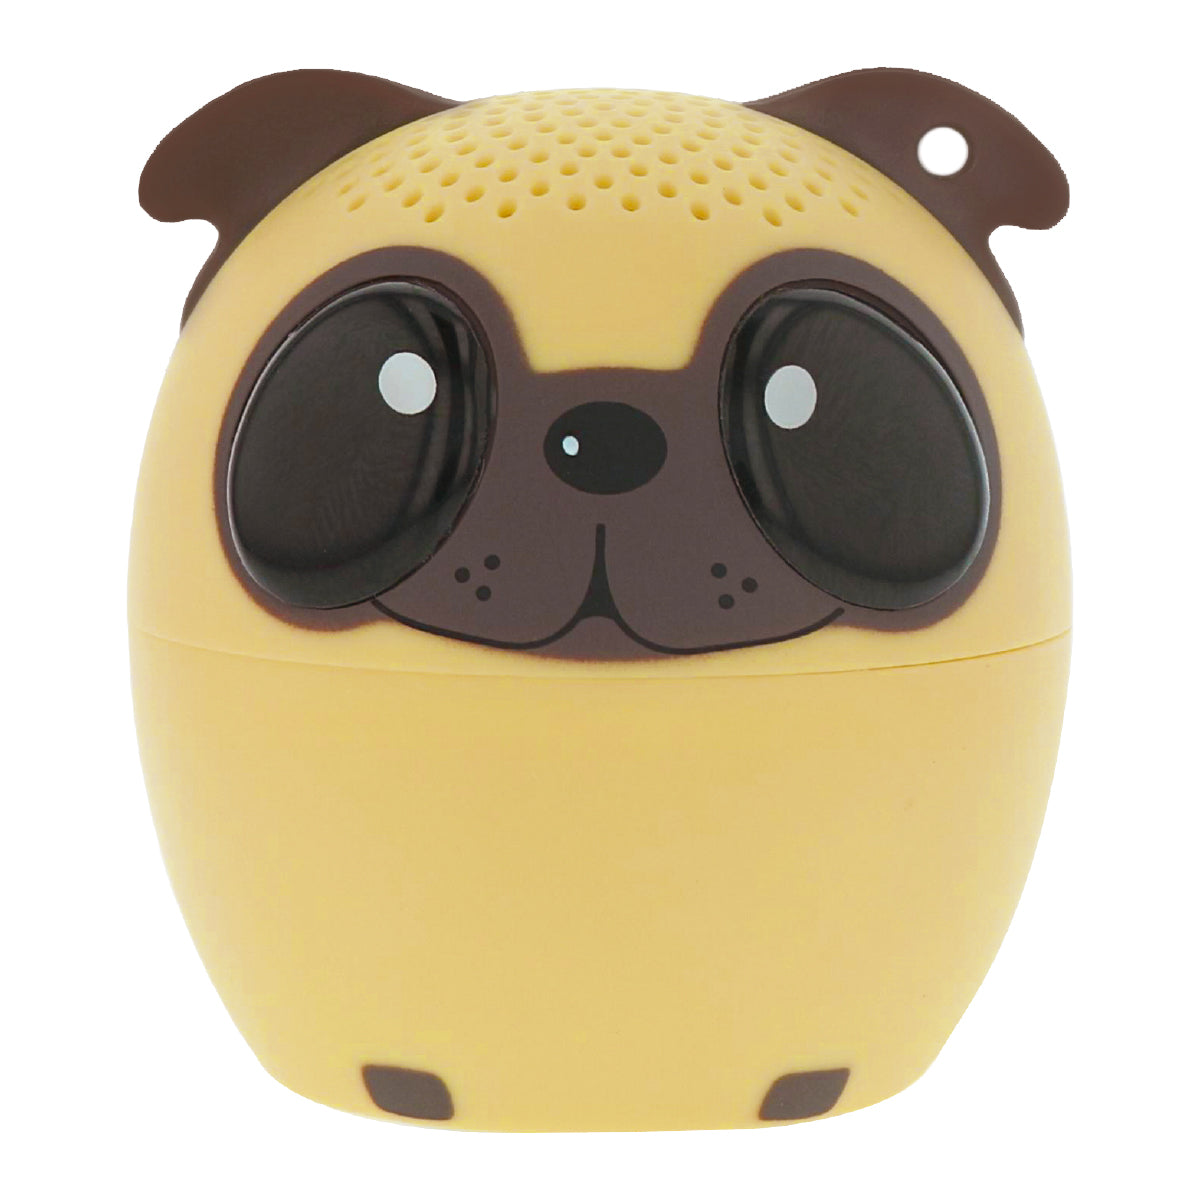 iTouch Animal Wireless Speaker: Puppy affordable wireless speaker